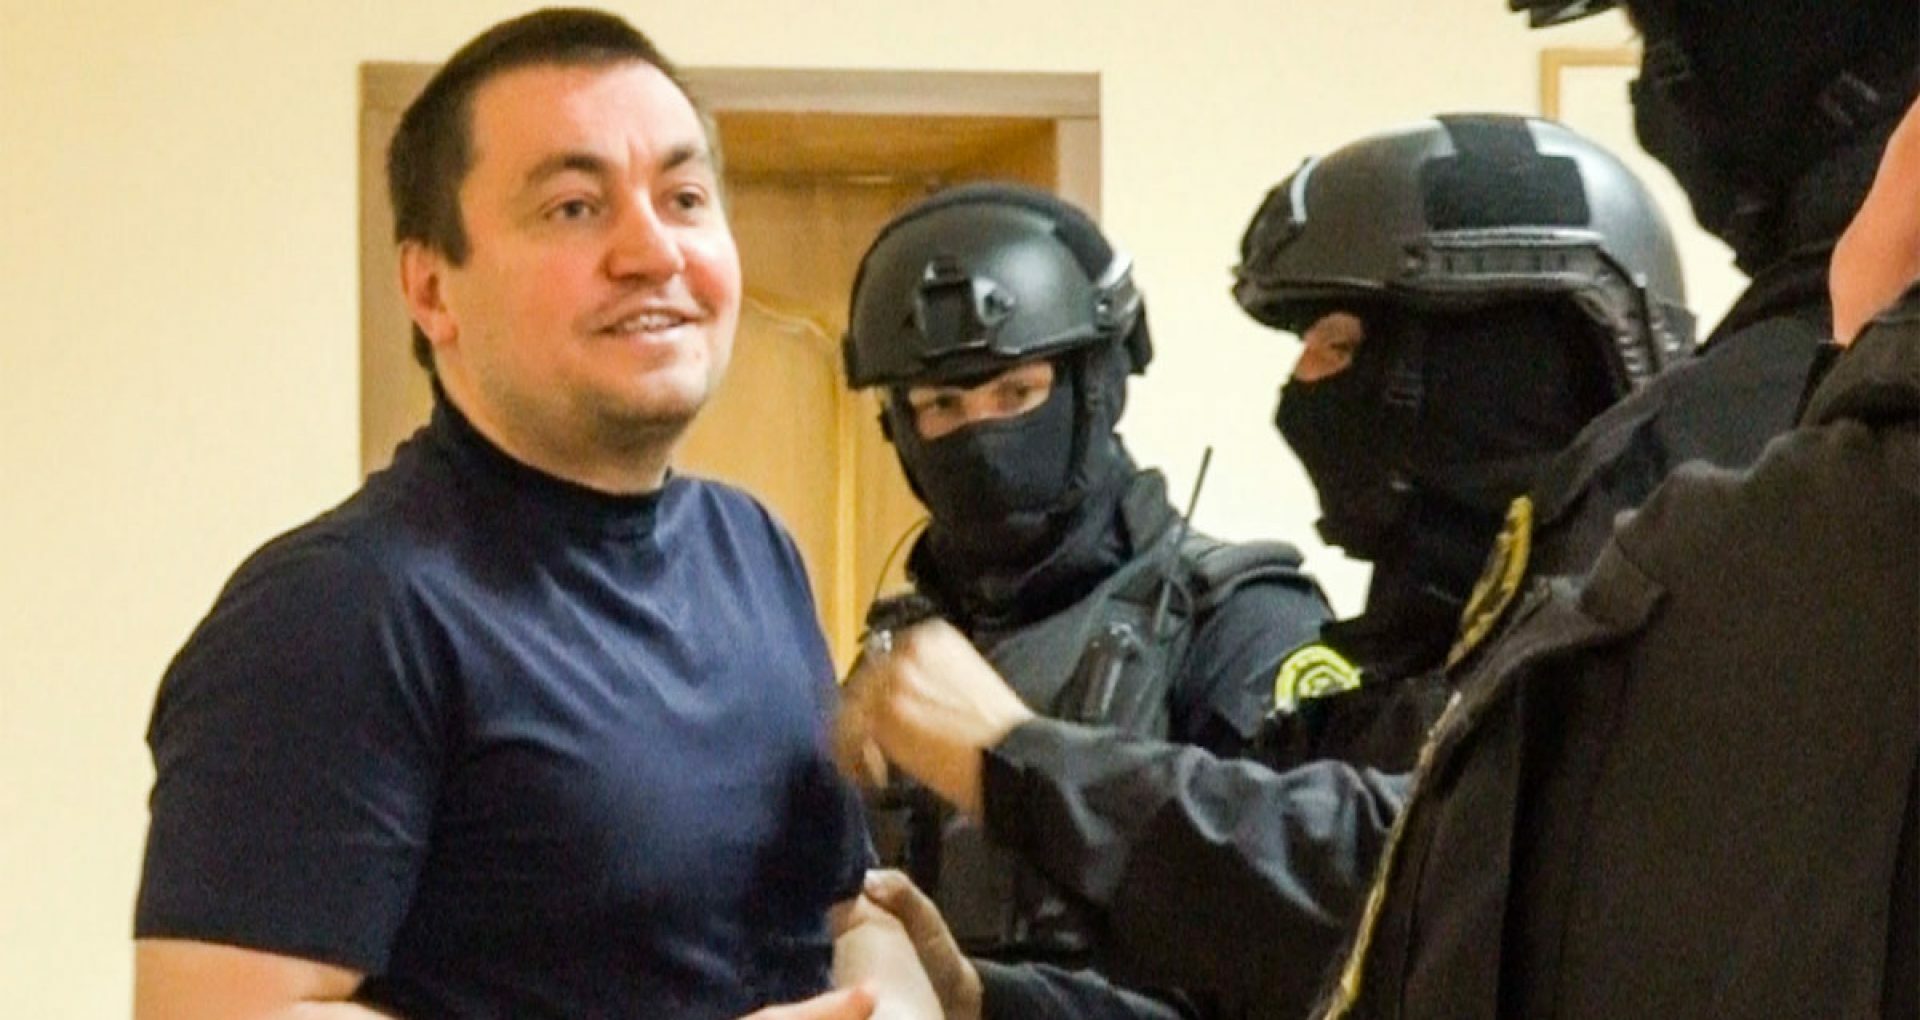 Chișinău Court Issues an Arrest Warrant on the Controversial Businessman Veaceslav Platon After he left Moldova for London